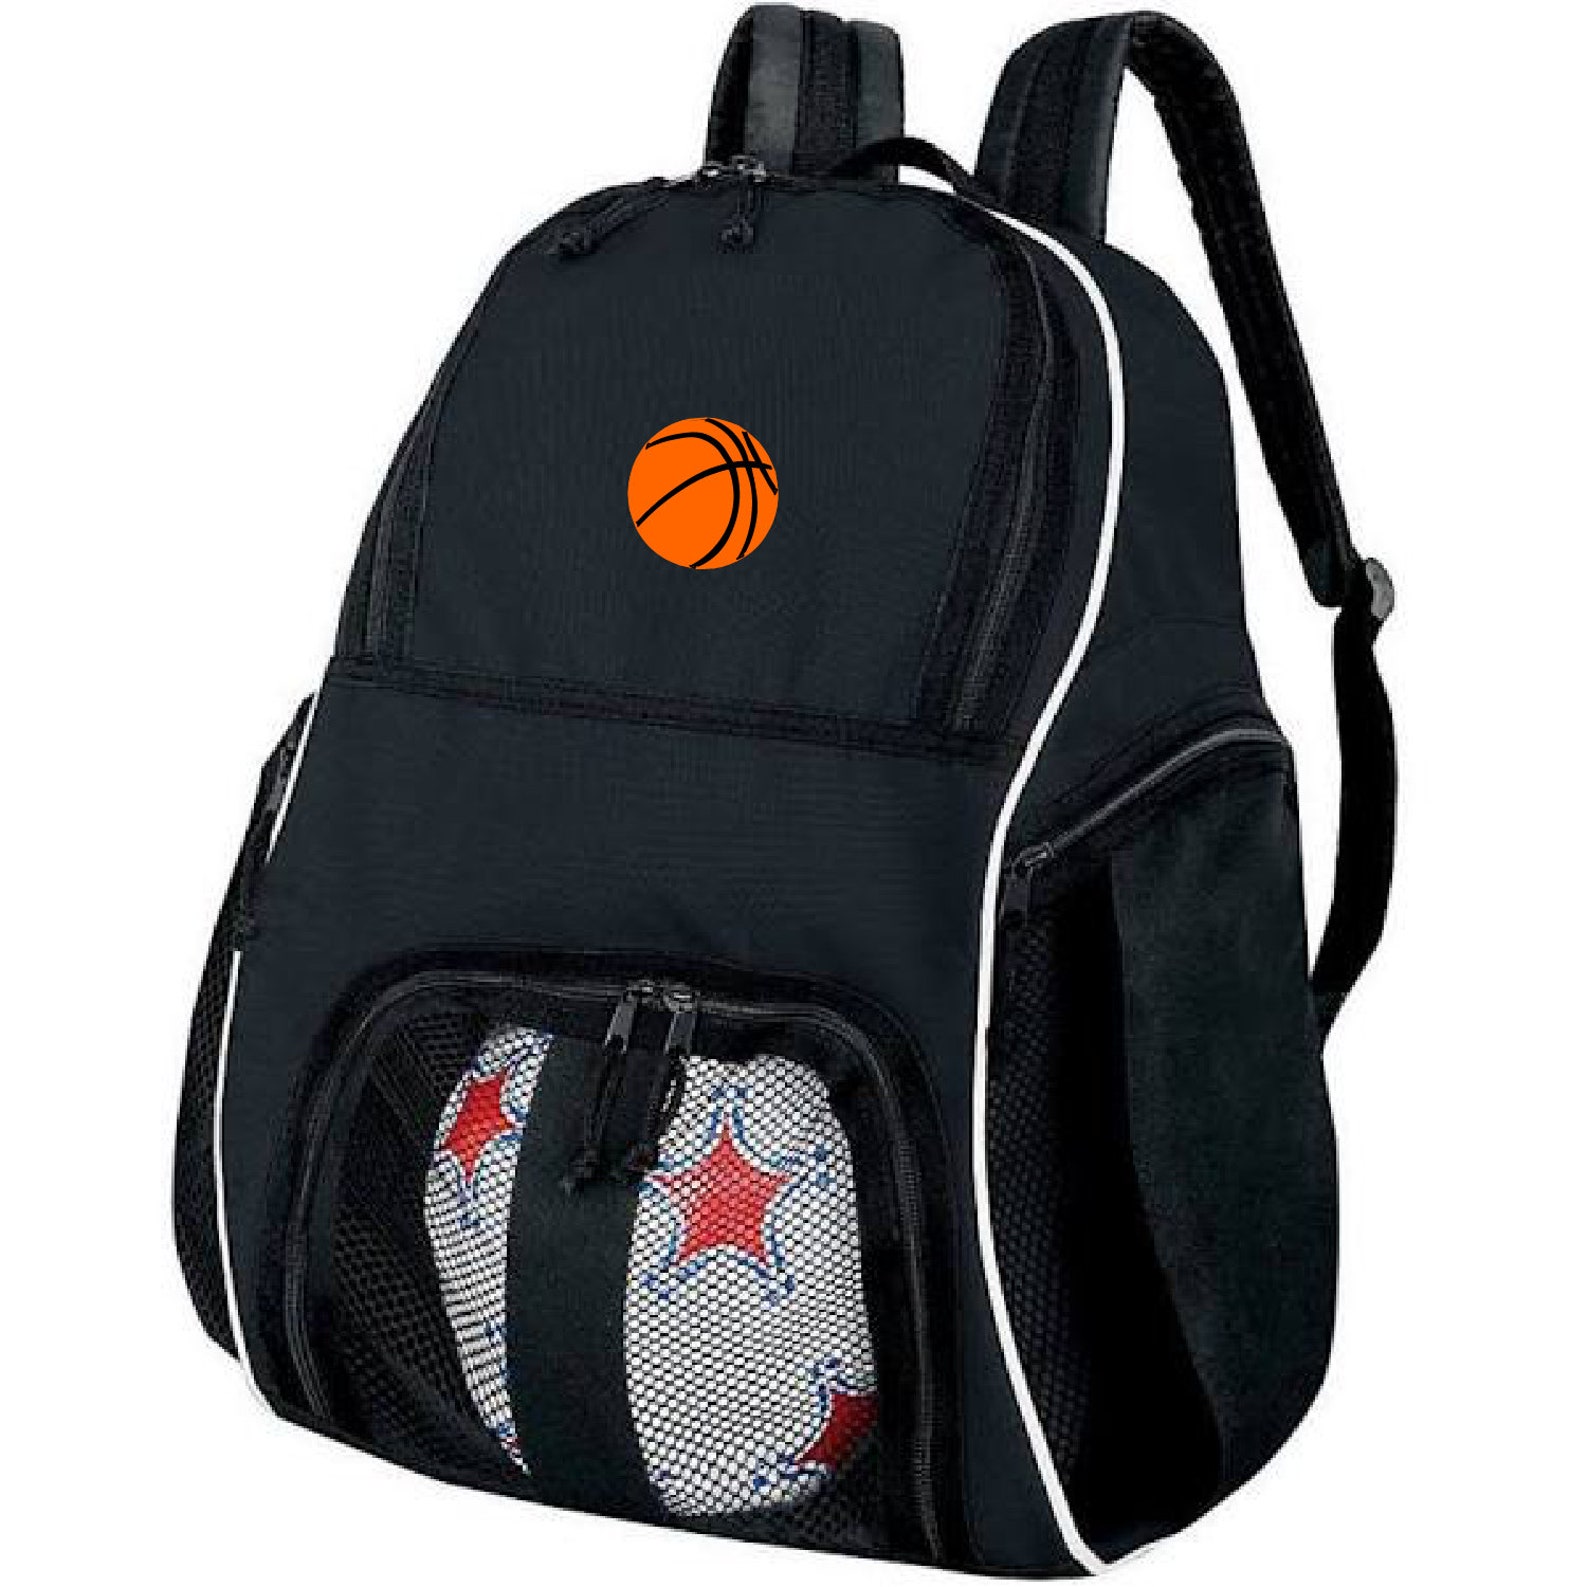 Name With Basketball Backpack Name Basketball Backpack - Etsy